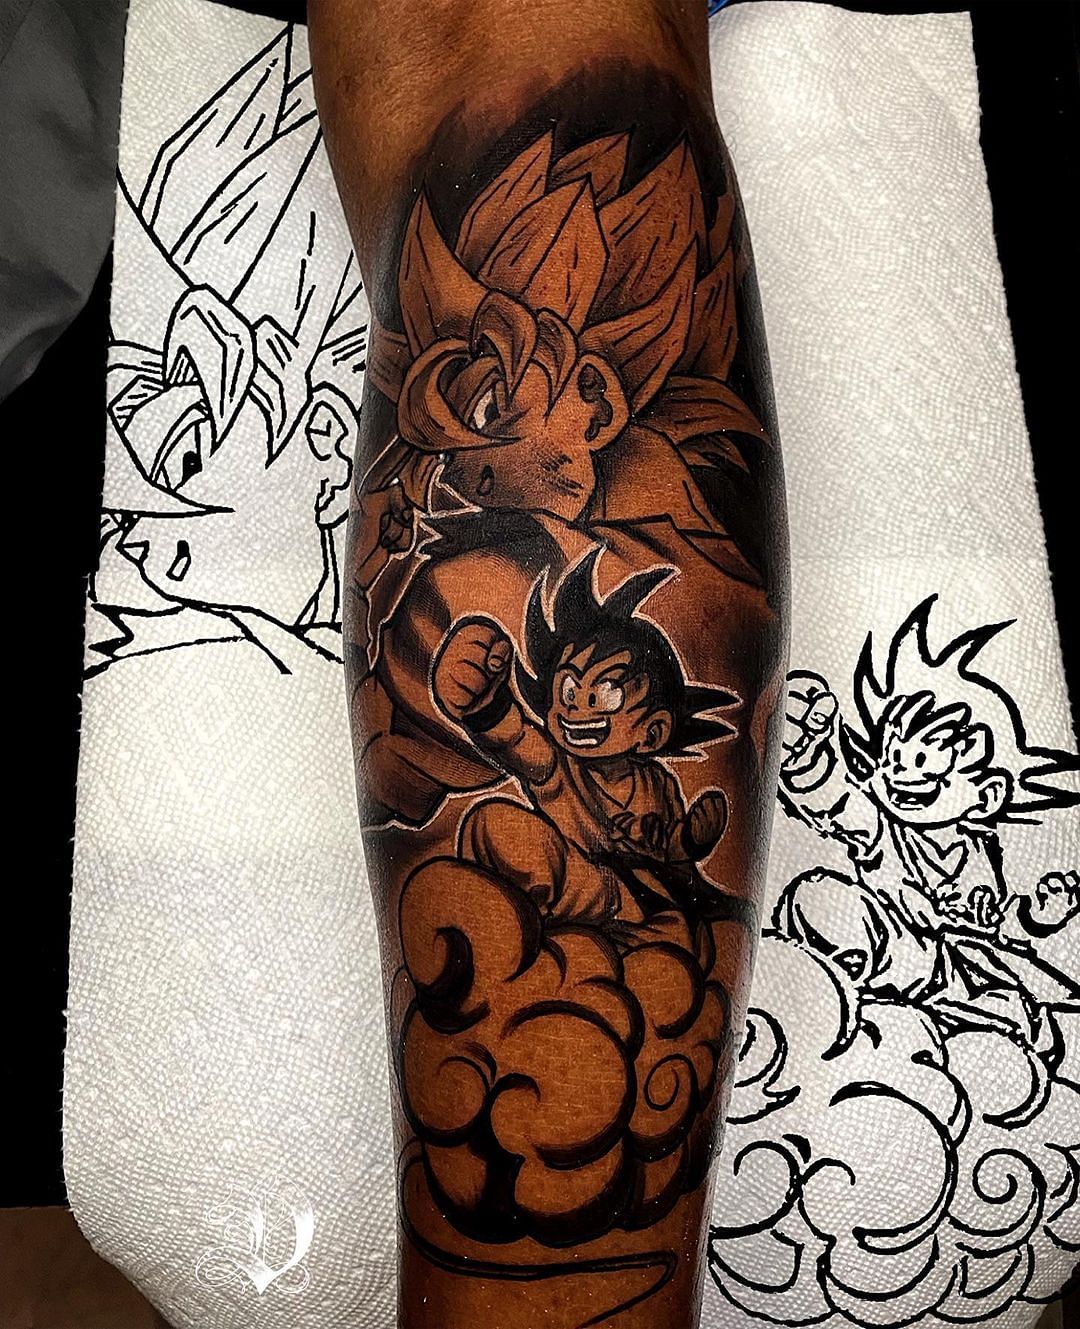 Finally got my first DB tattoo Goku Black  rdbz